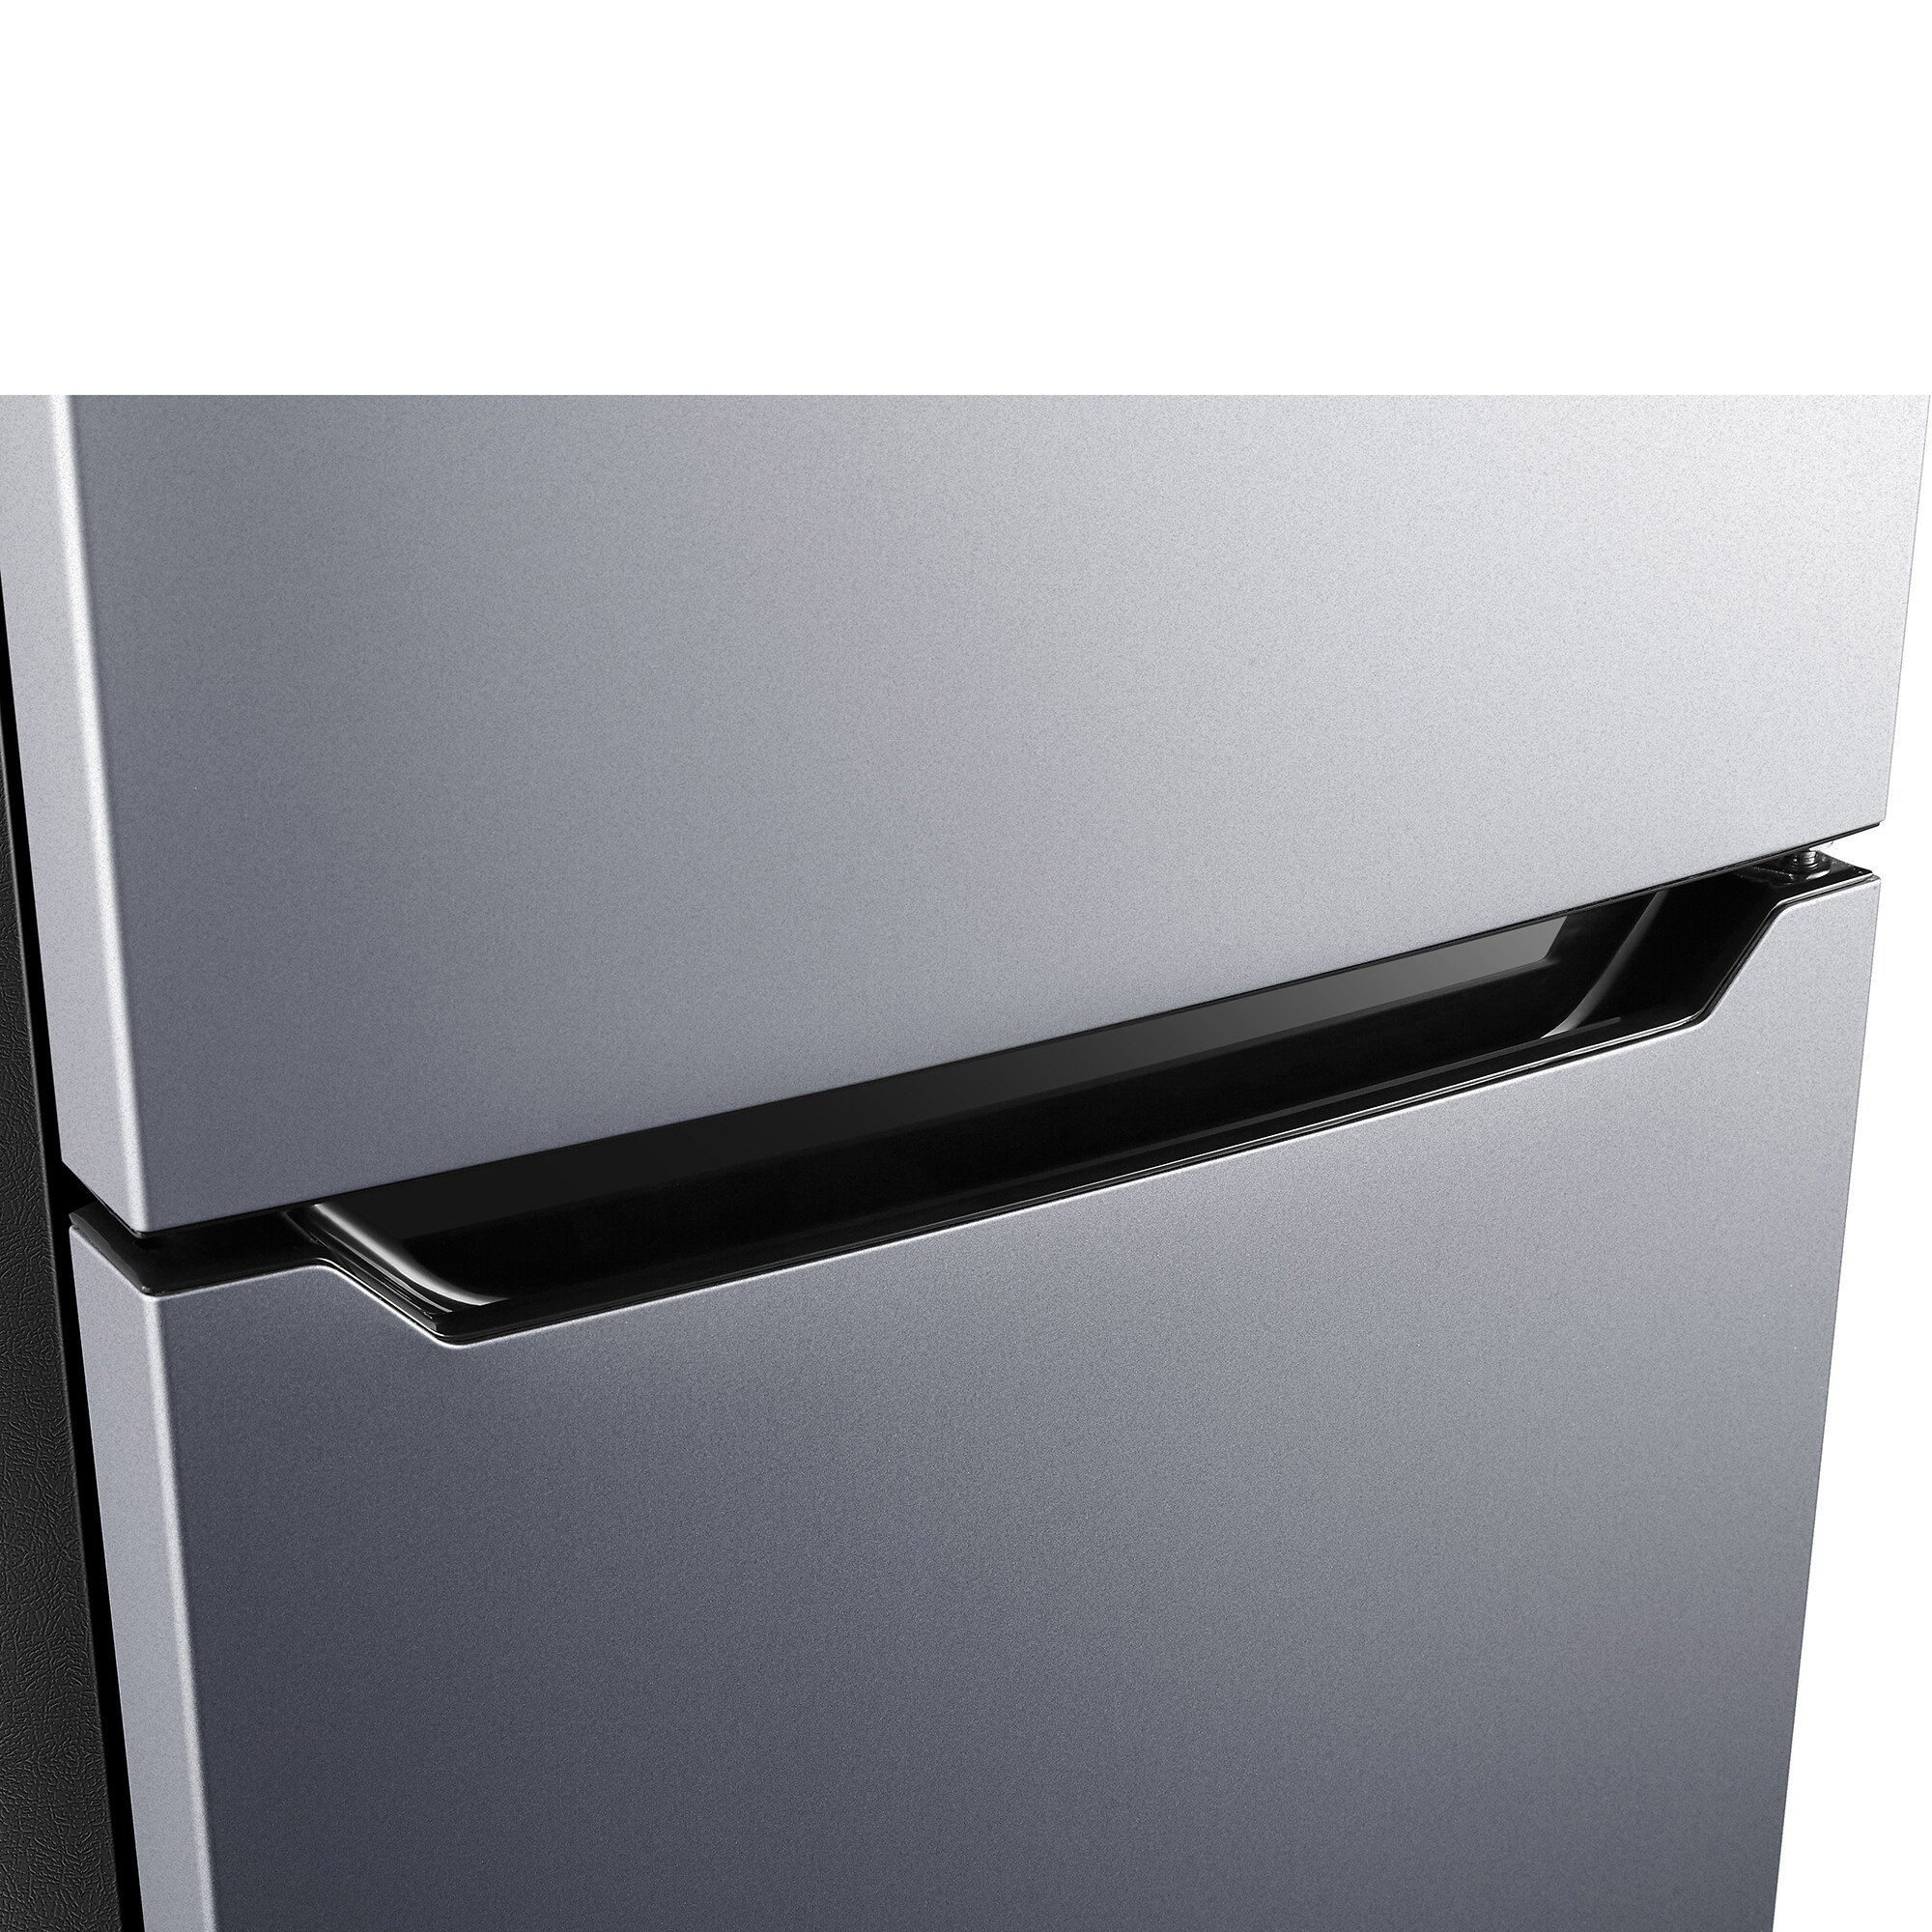 KDN30N12E8 free-standing fridge-freezer with freezer at top